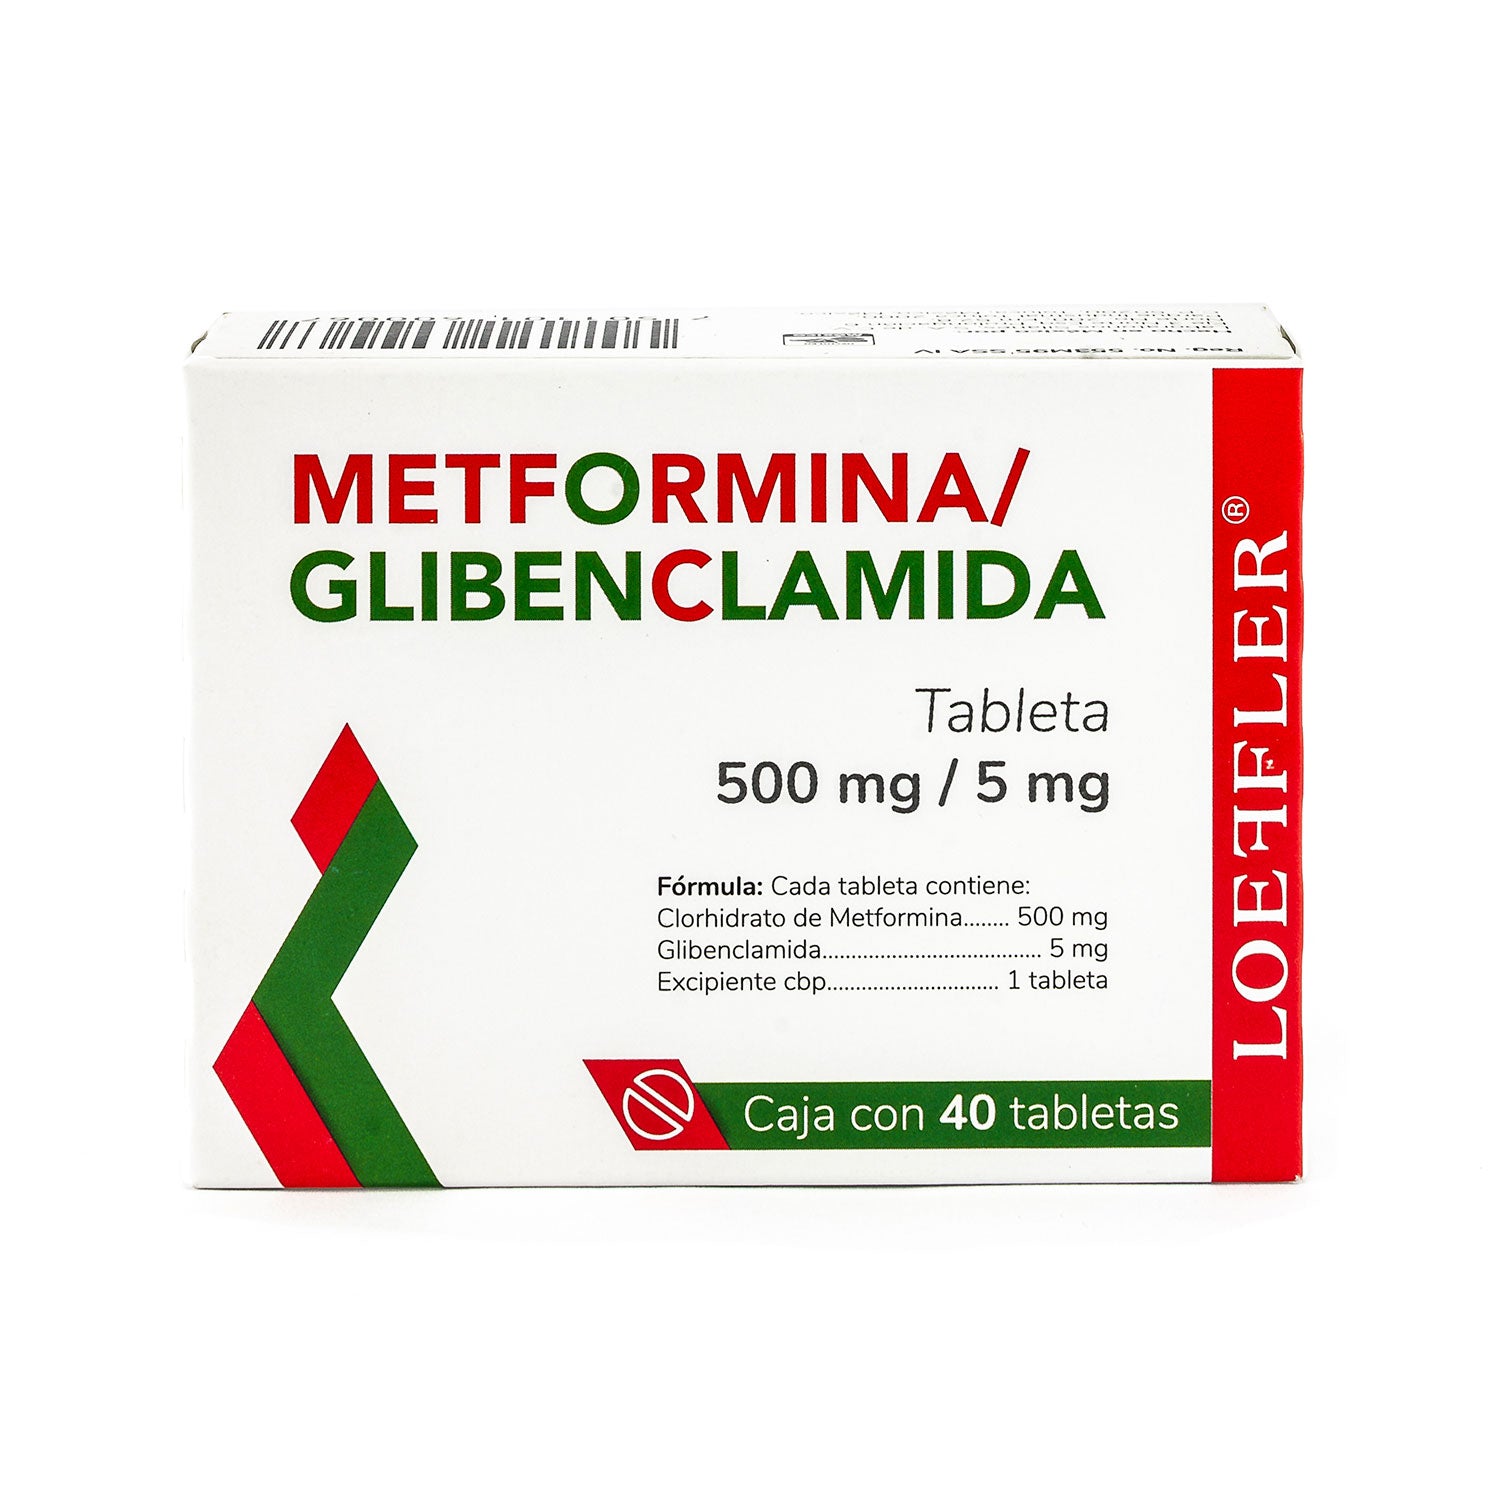 Metformina / glibenclamida, 500 mg / 5 mg, 40 tabletas – Vitialife